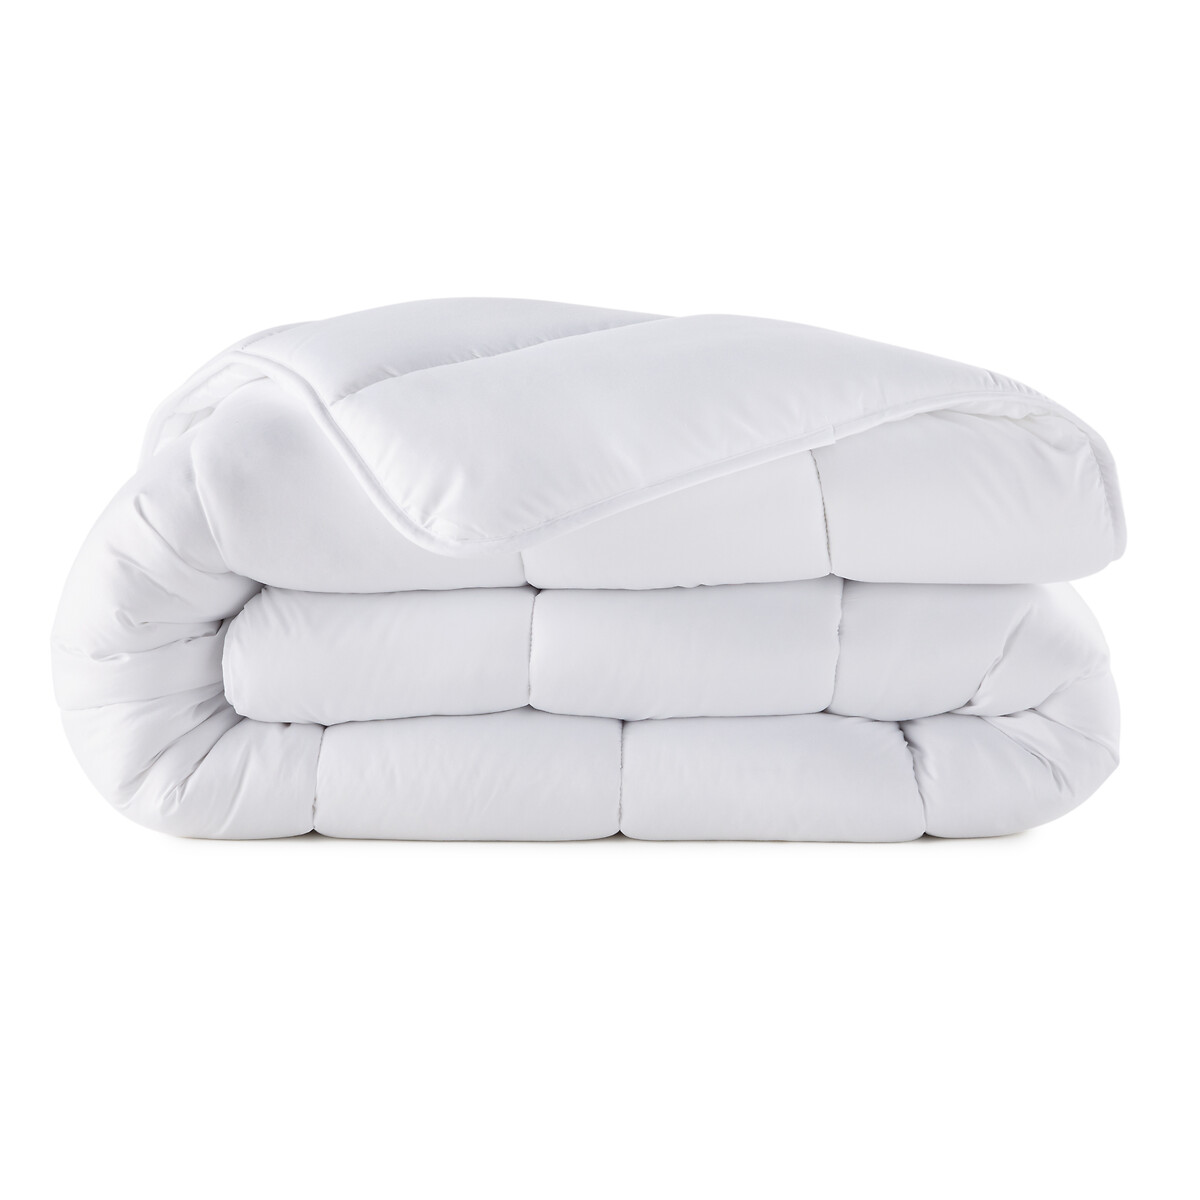 Одеяло La Redoute С обработкой  гм 260 x 240 см белый, размер 260 x 240 см - фото 2